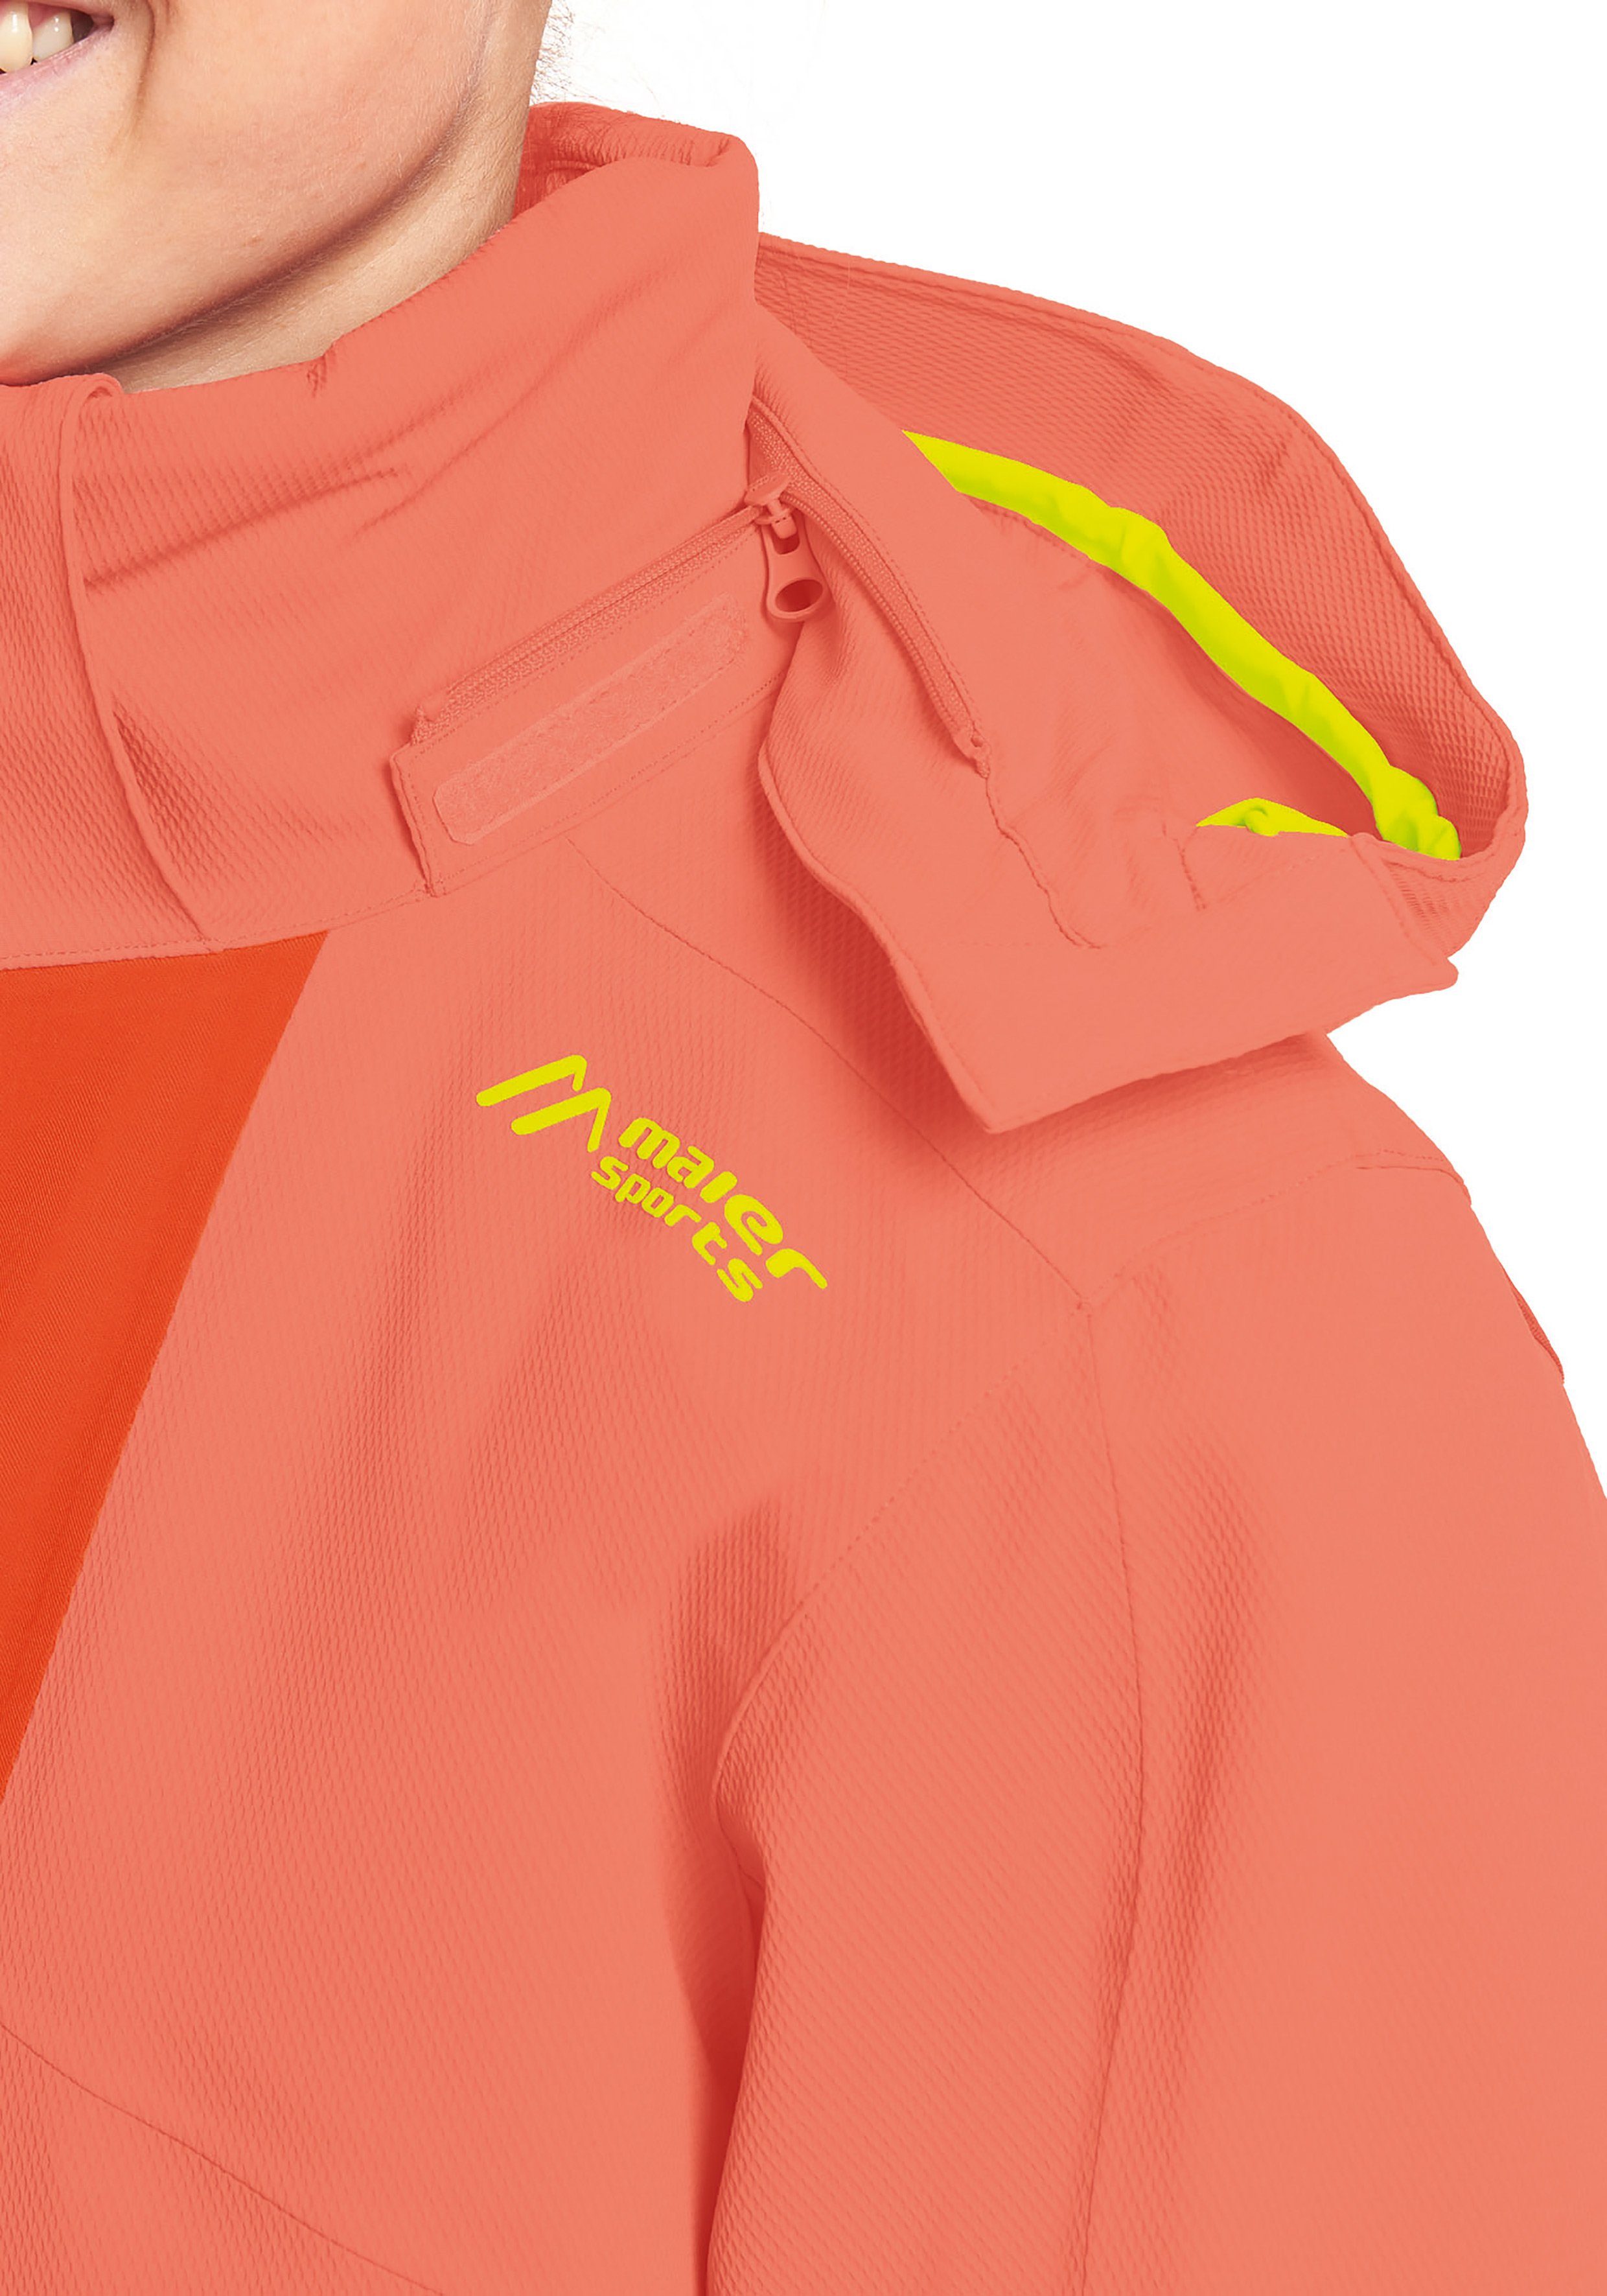 Maier Sports Skijacke Fast Impulse Modern Freeride W perfekt designte Piste Skijacke und – orangerot für